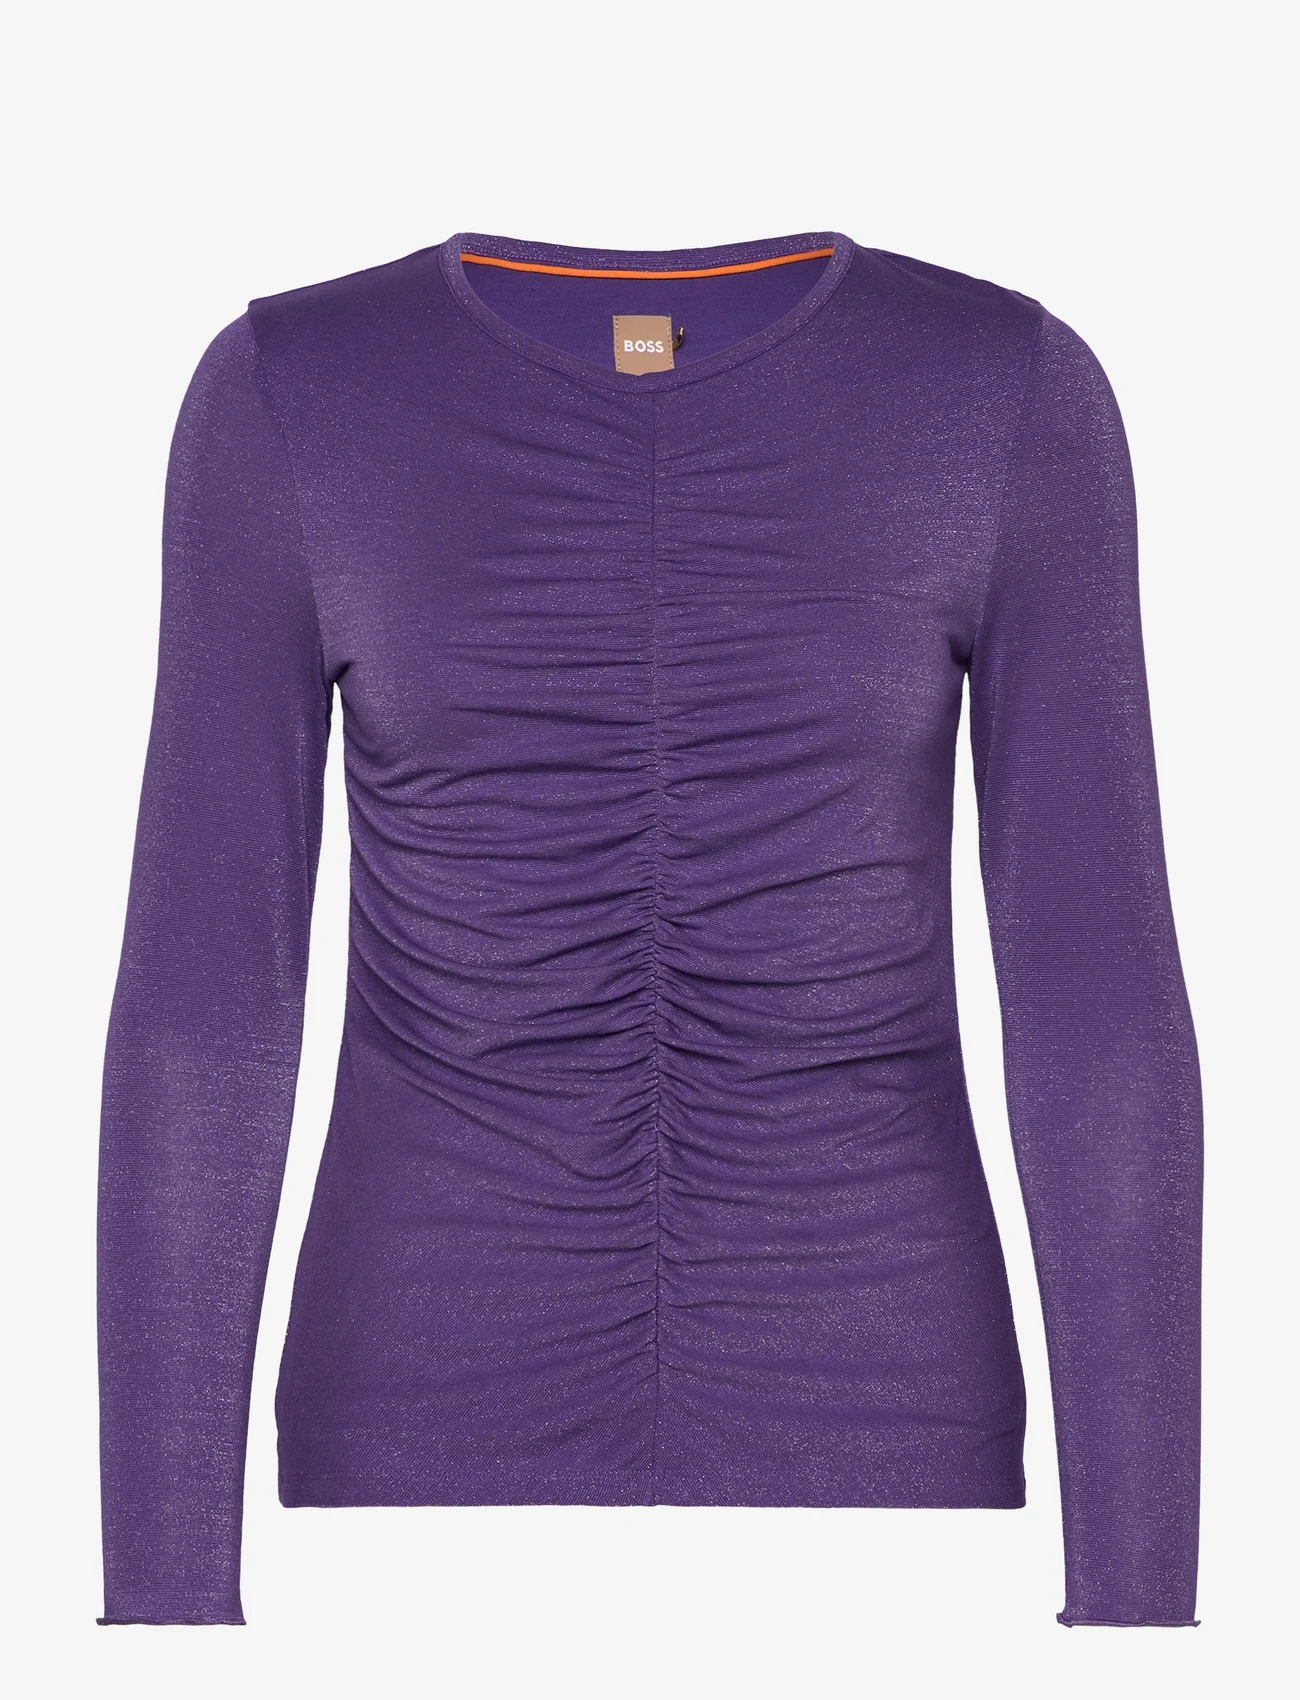 BOSS - C_Emeela_glitter - bluzki z długimi rękawami - open purple - 0